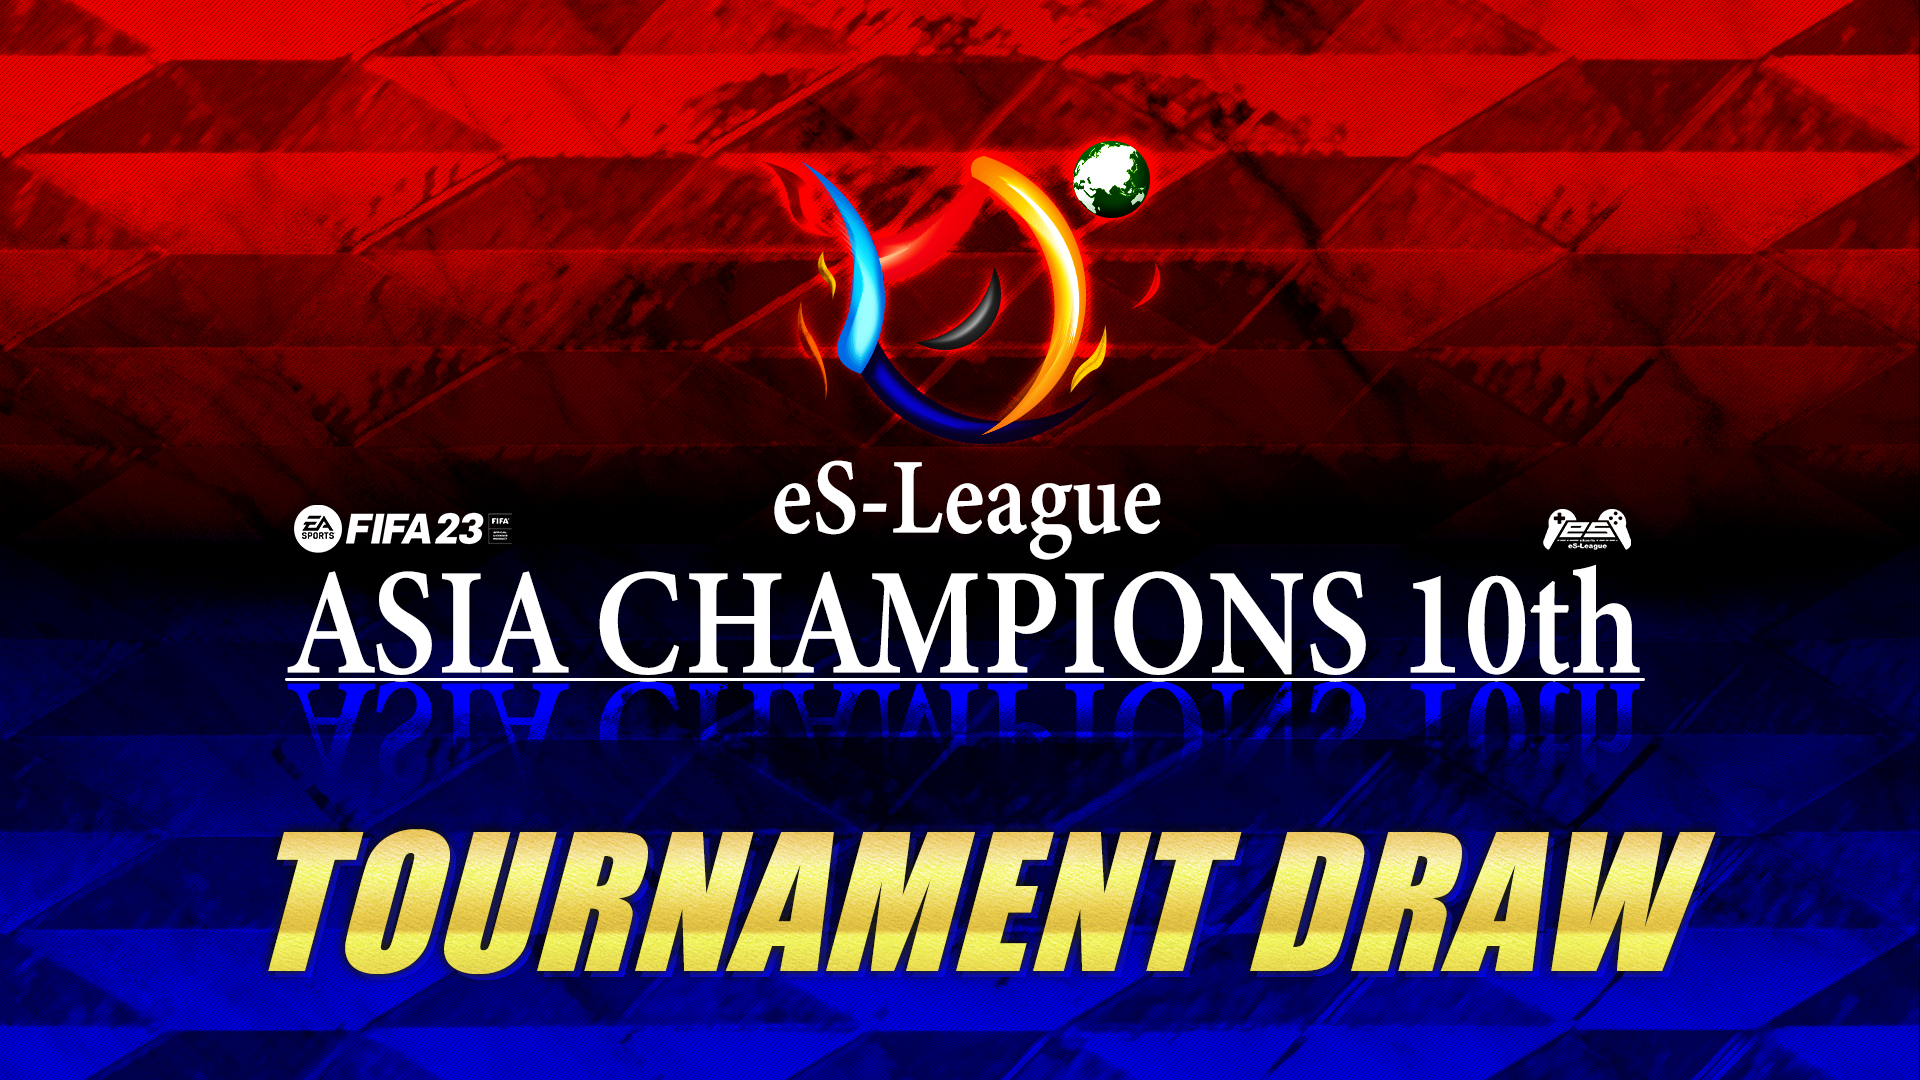 eS-League ASIA CHAMPIONS 10th Tournament DRAW